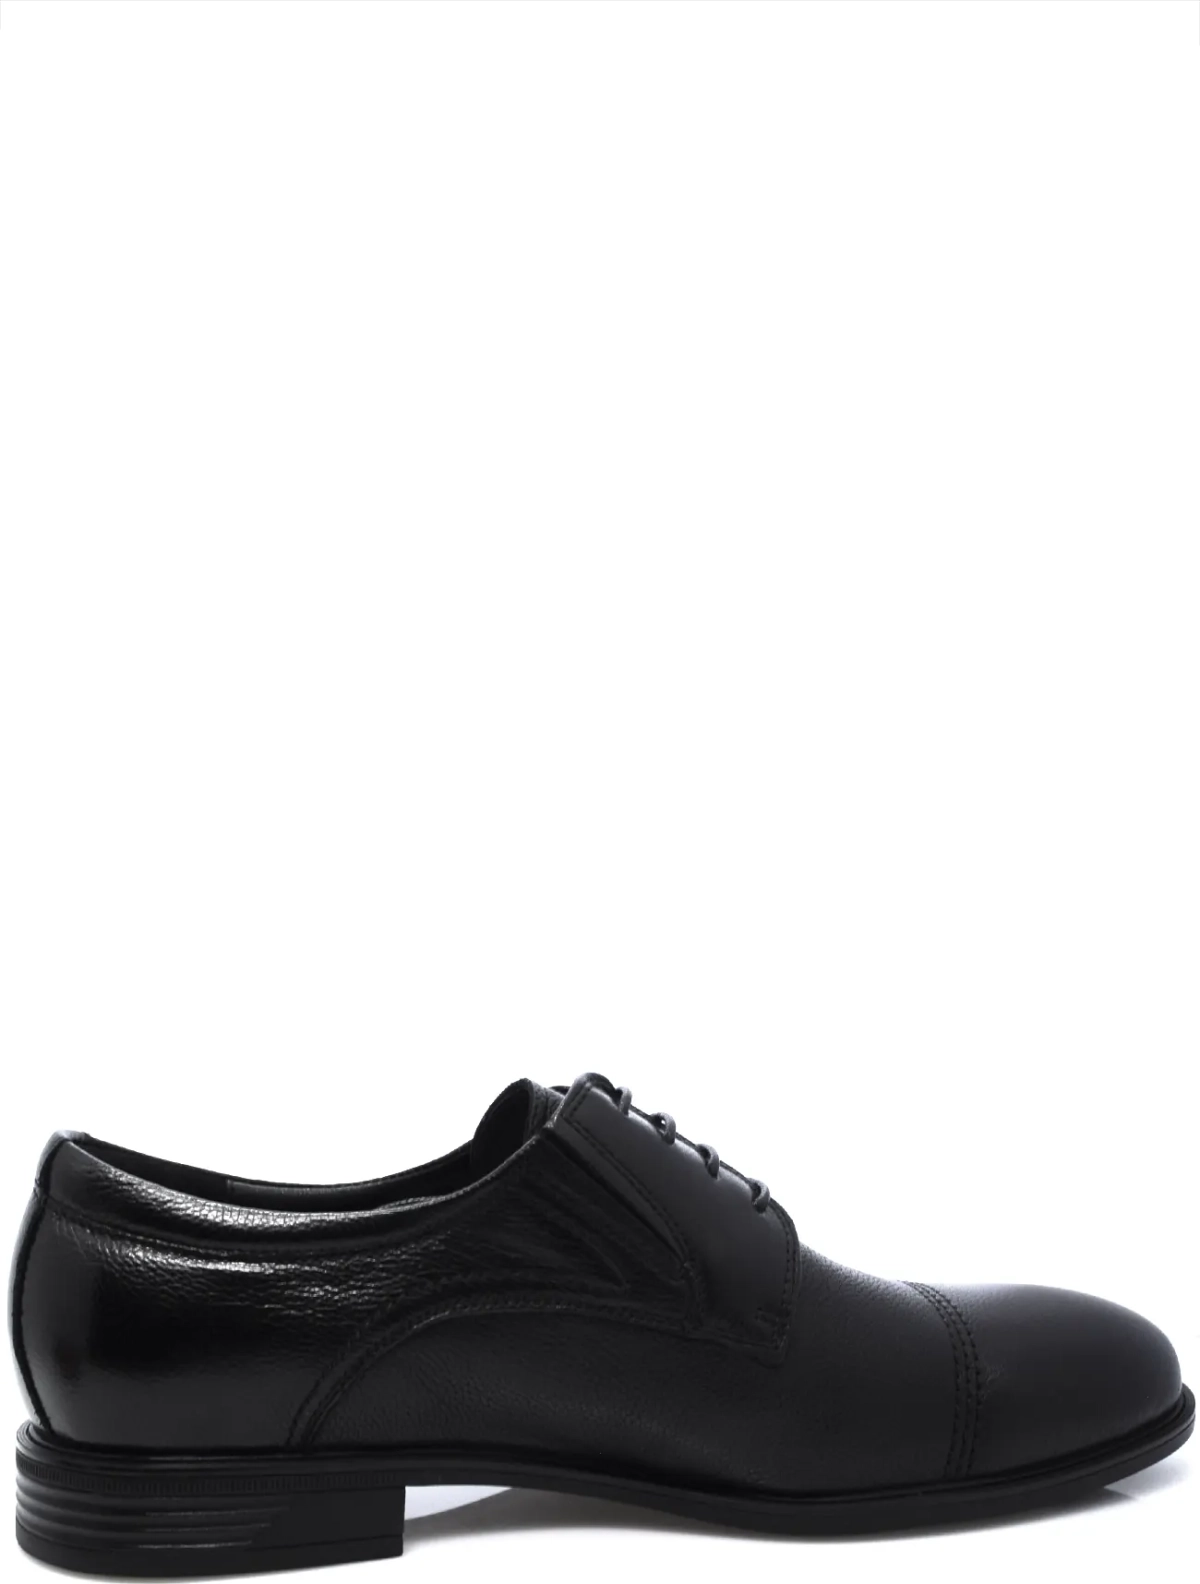 Roscote K15706-DB01-T4081H мужские туфли